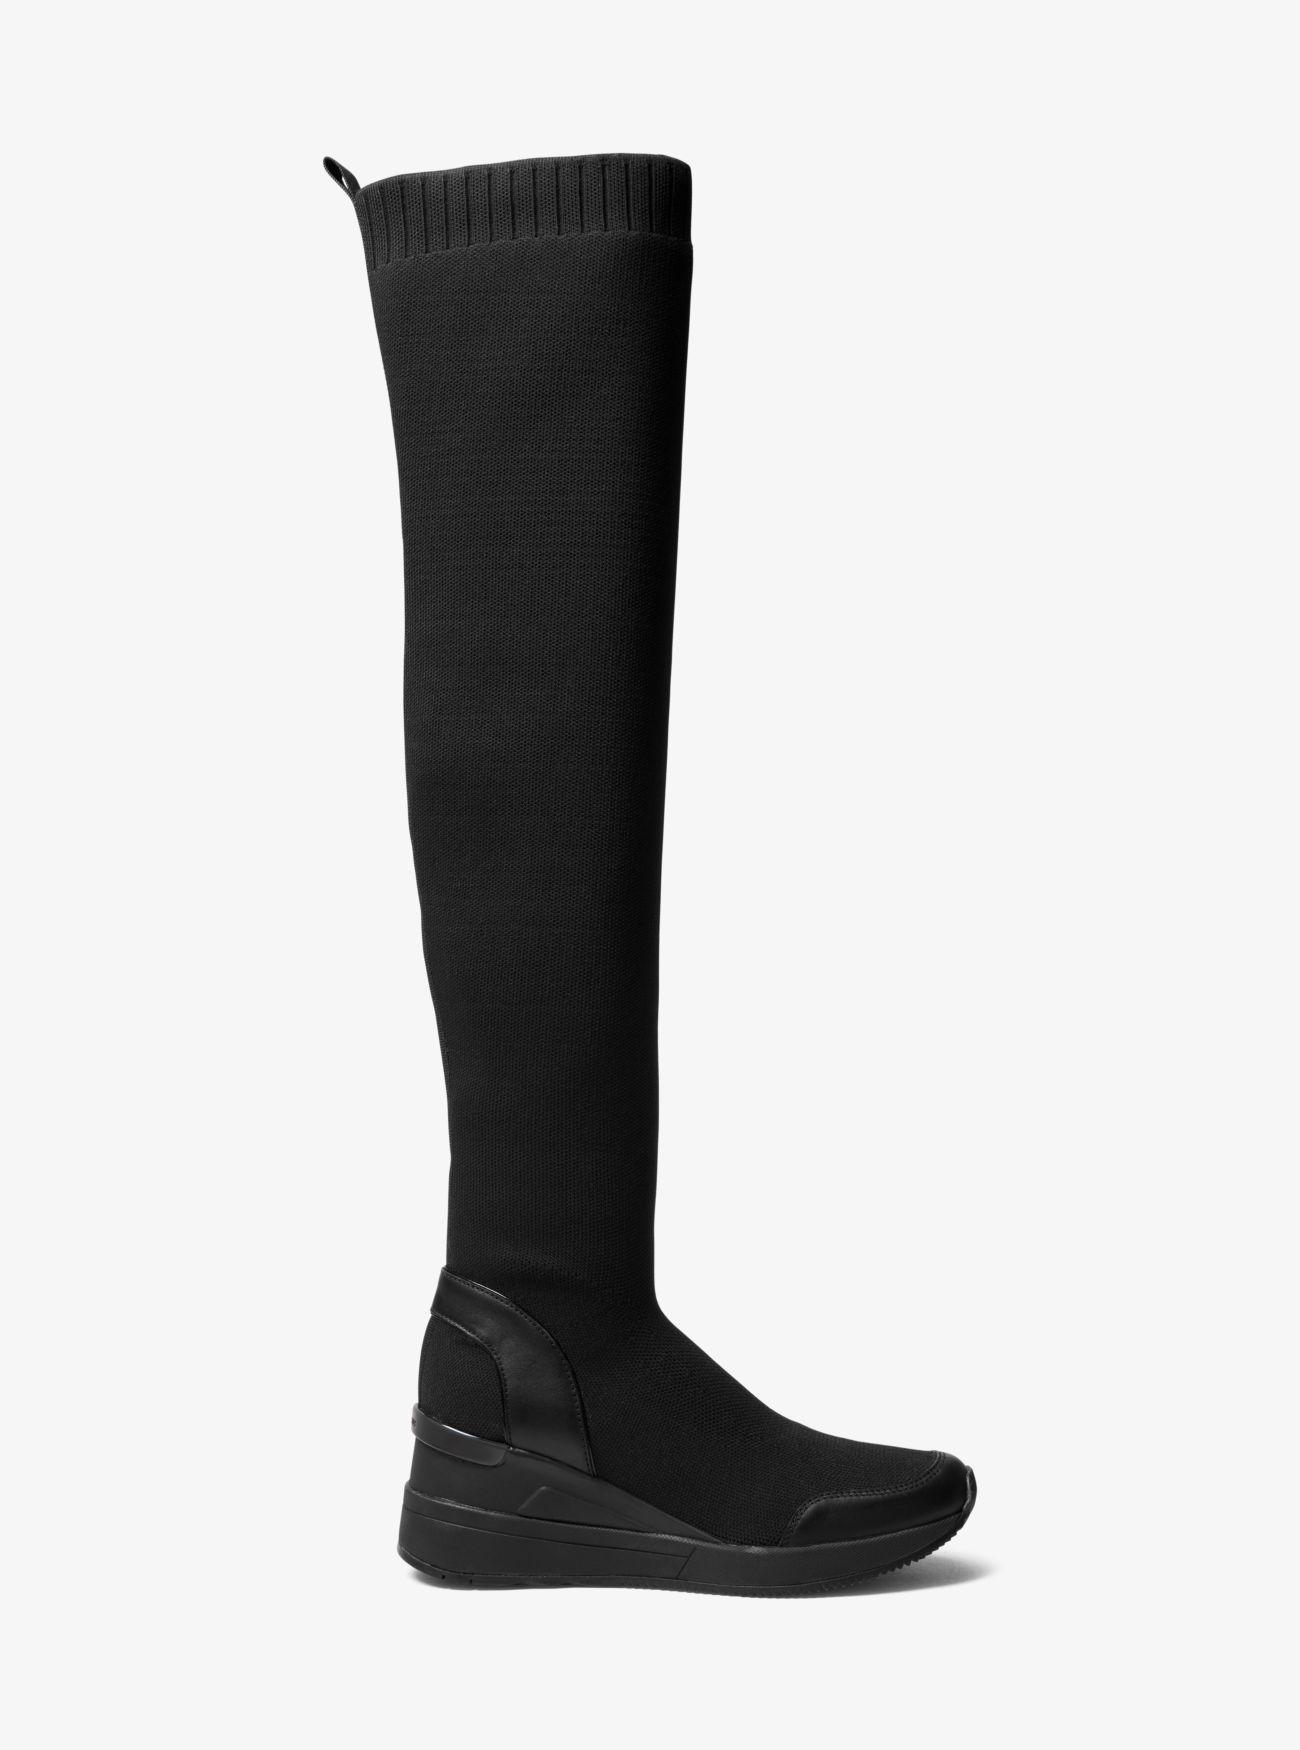 Grover Knit Sneaker Boot in Black 